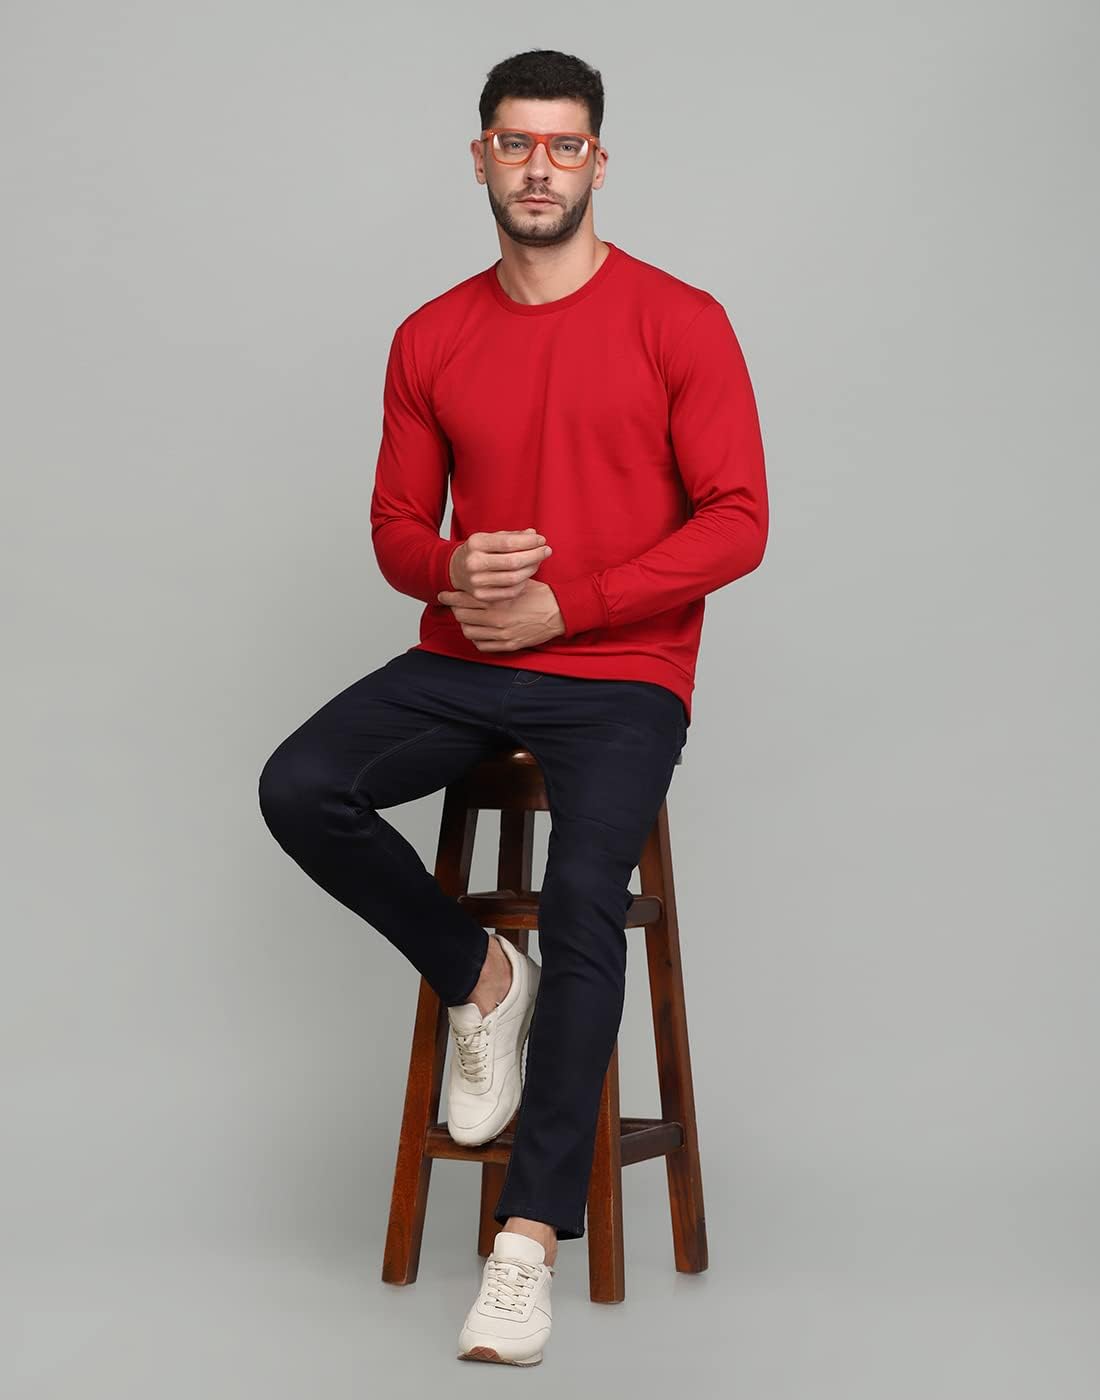 SPUNN Men's Cotton Round Neck Full Sleeves Sweatshirt.  (RED)